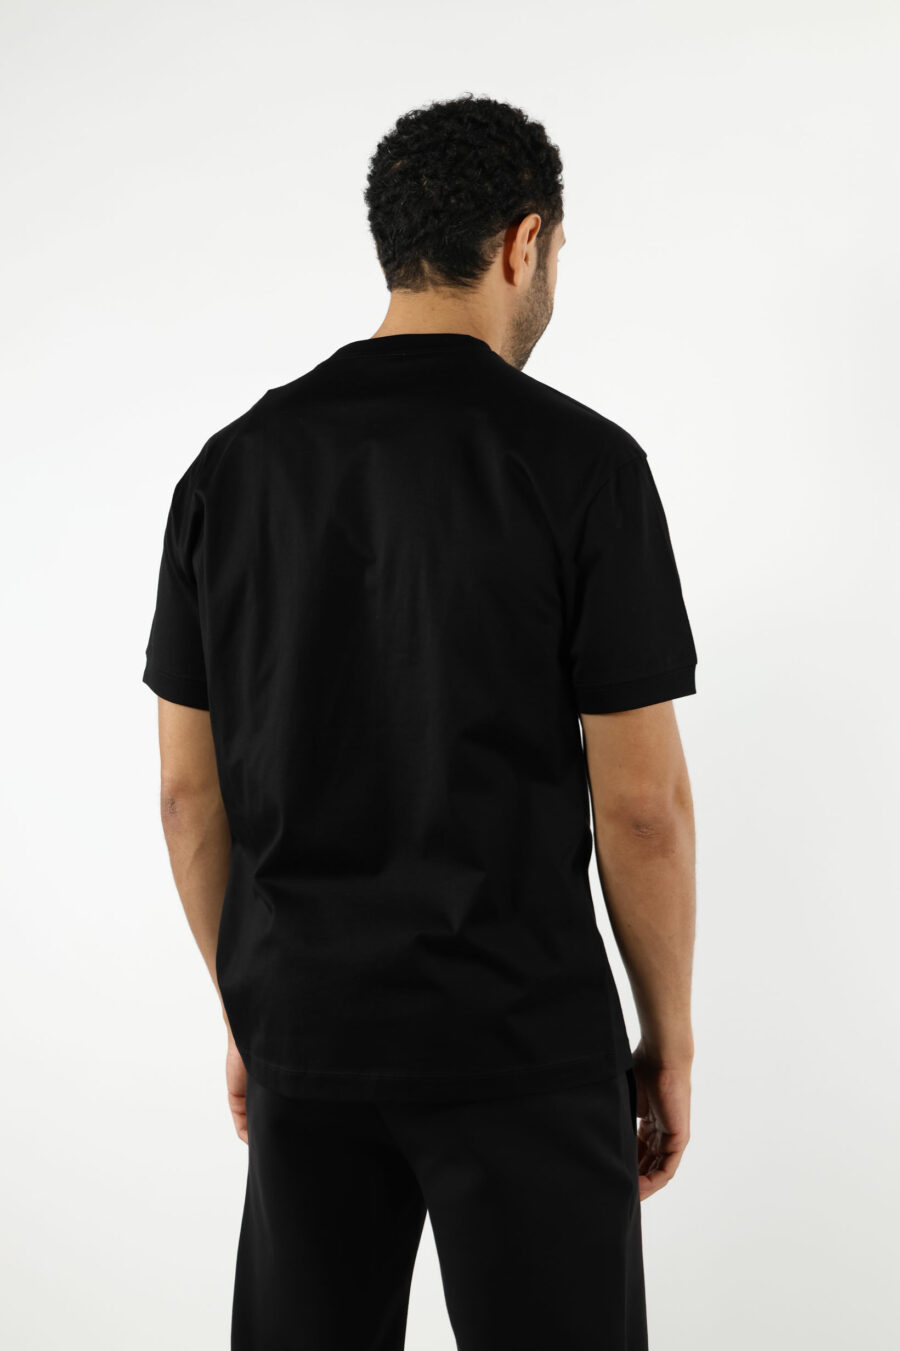 Camiseta negra con maxilogo "lux identity" en recuadro verde - 110965